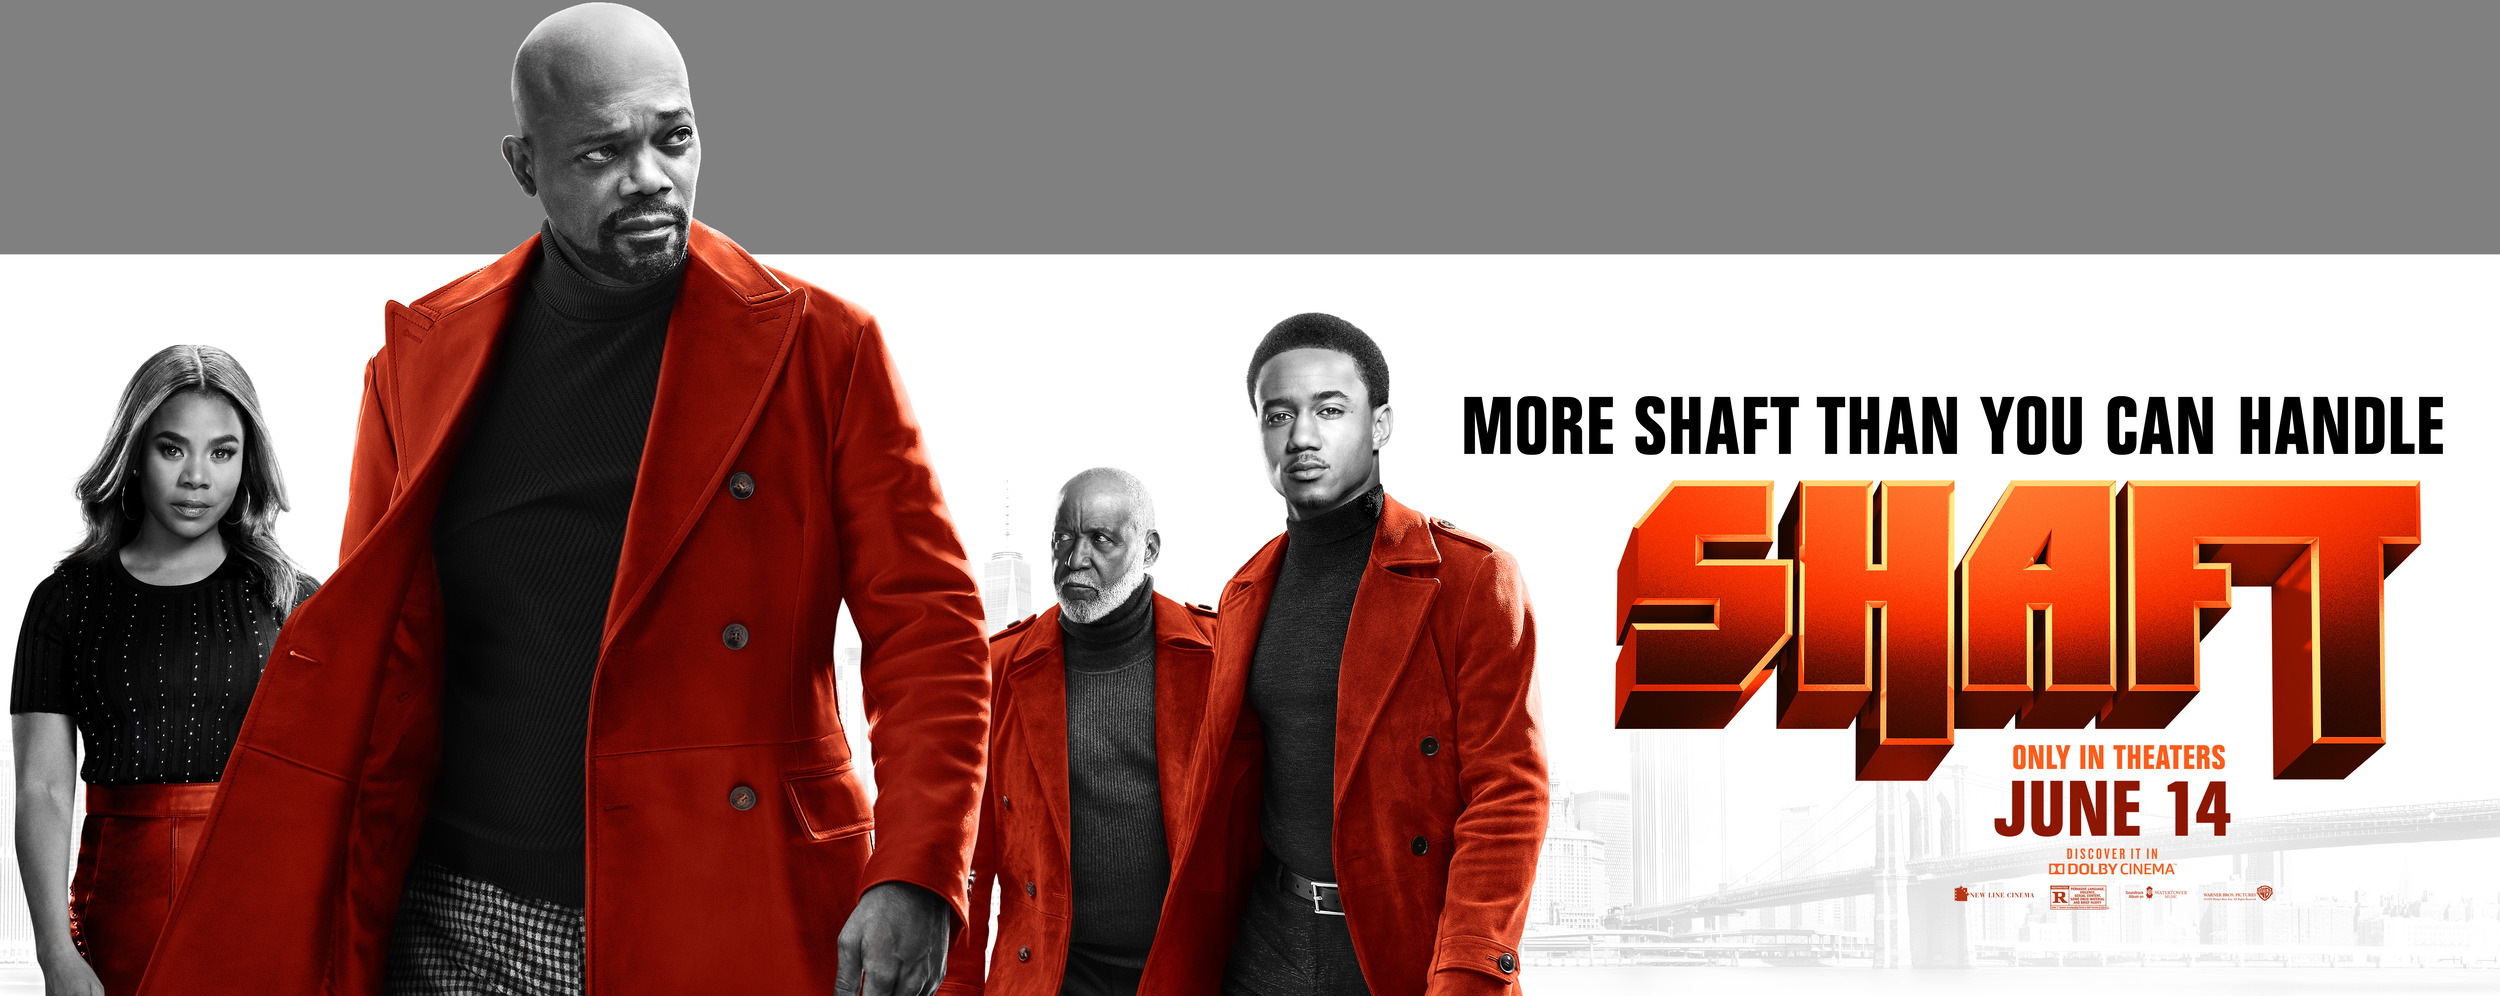 Mega Sized Movie Poster Image for Shaft (#2 of 7)